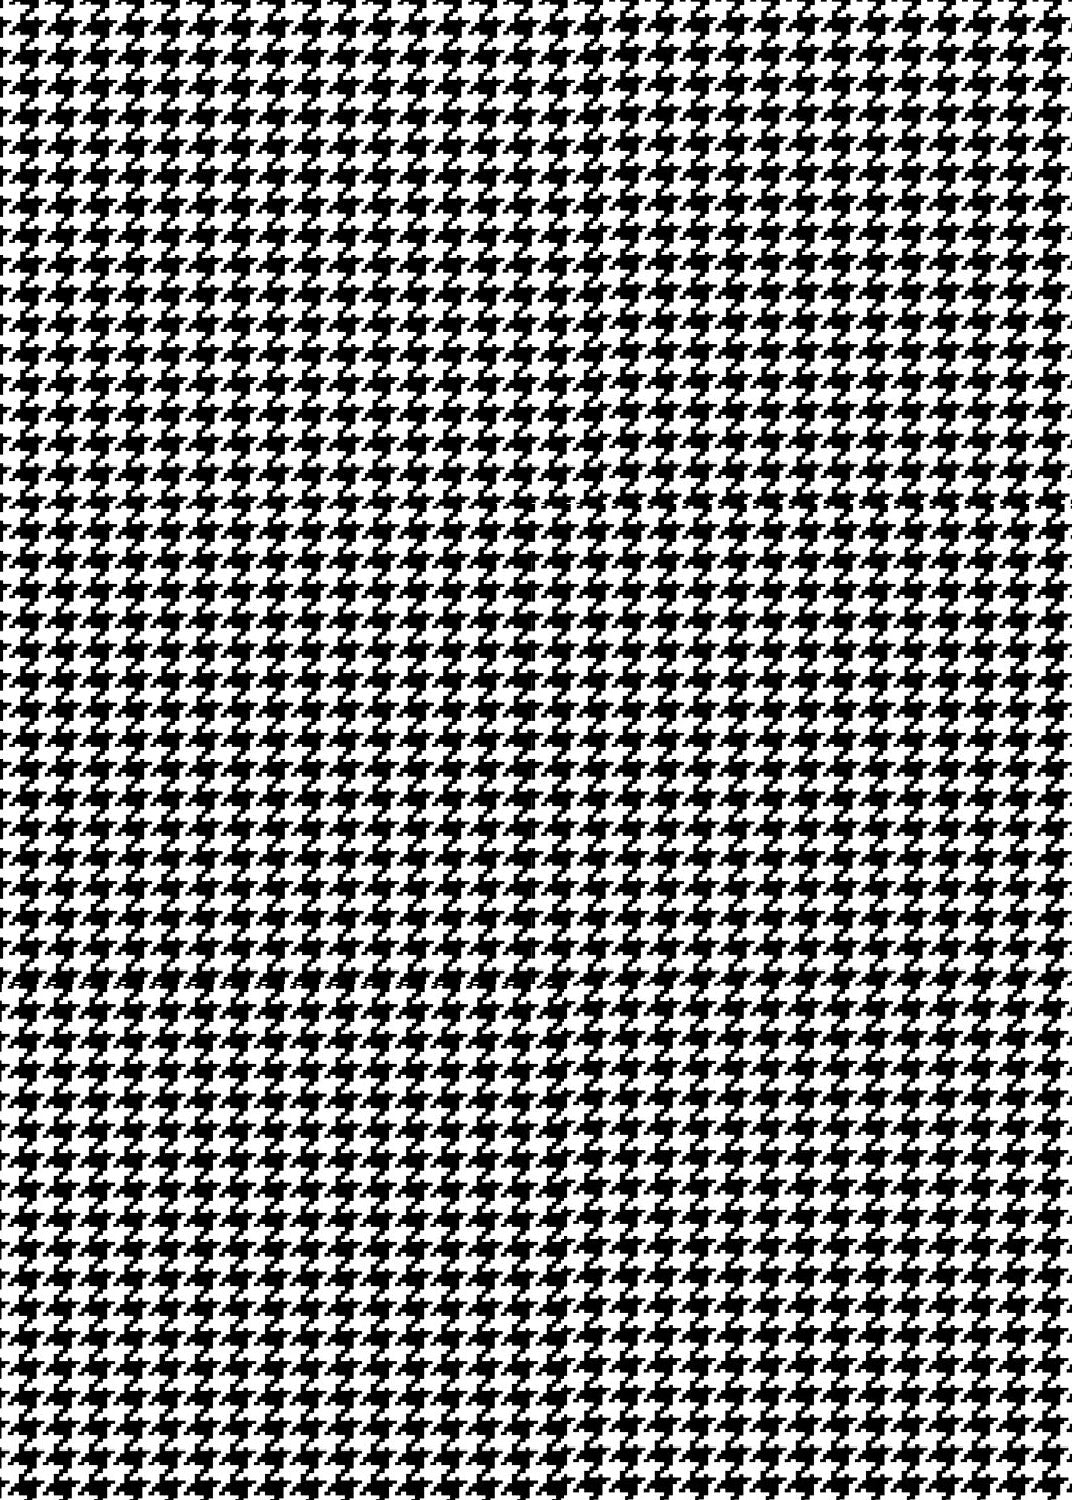 houndstooth-black-white-1072x1500_3dc0d332-4a9d-4728-a506-5ee4e13ad7cd.jpg